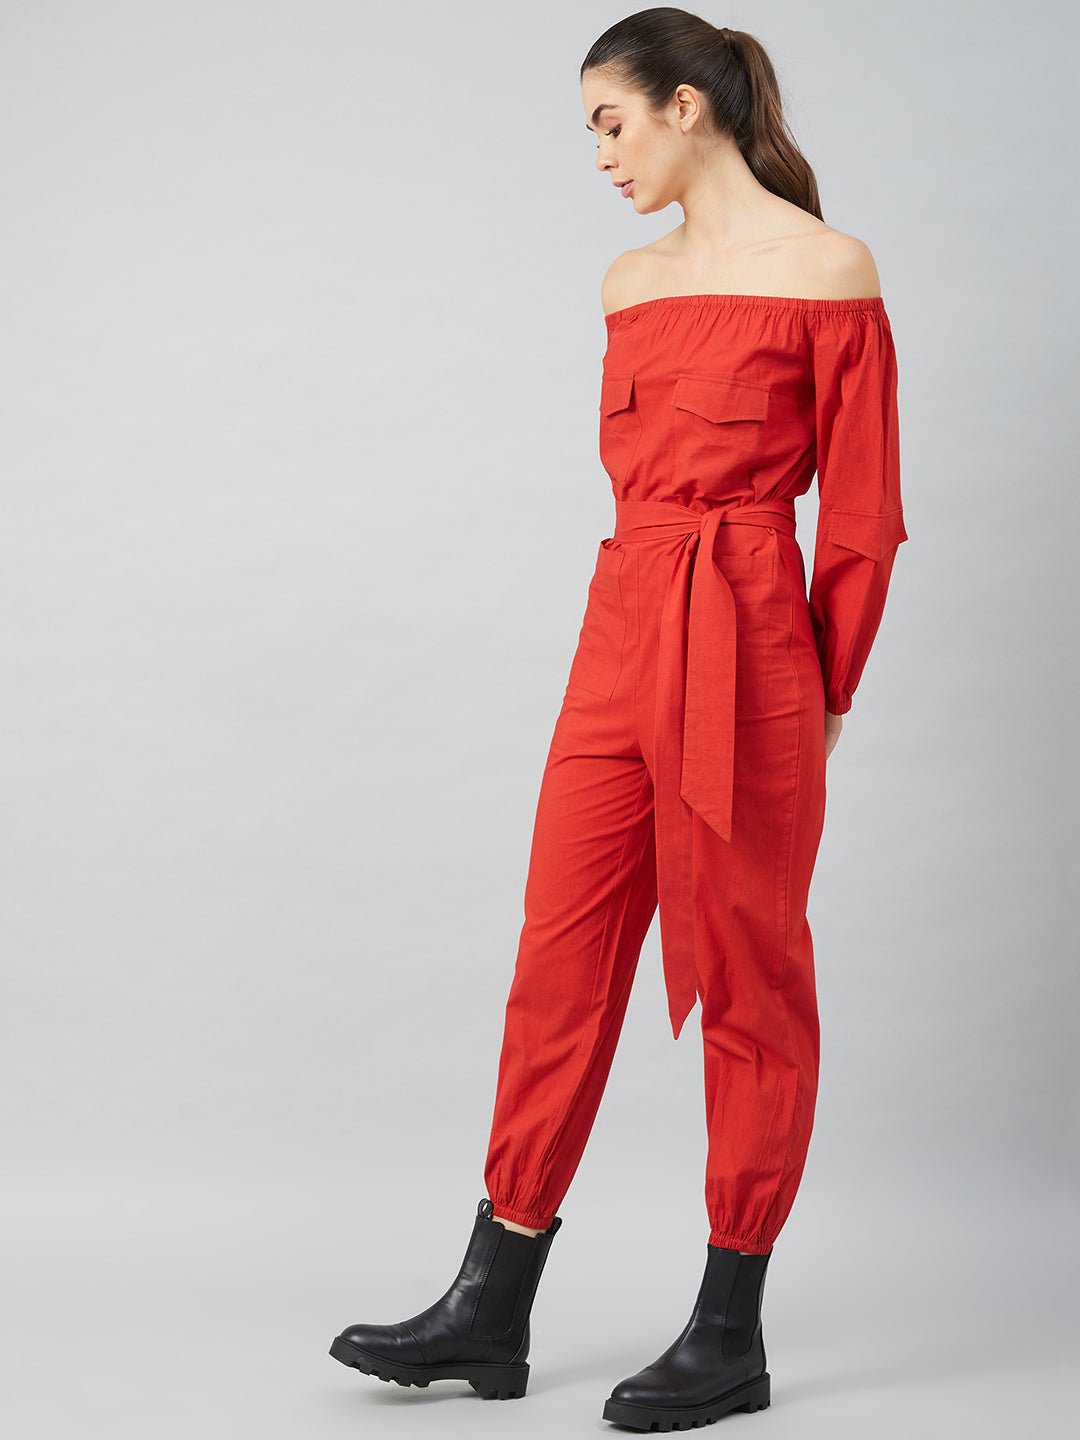 Athena Women Red Solid Cotton Jumpsuit - Athena Lifestyle